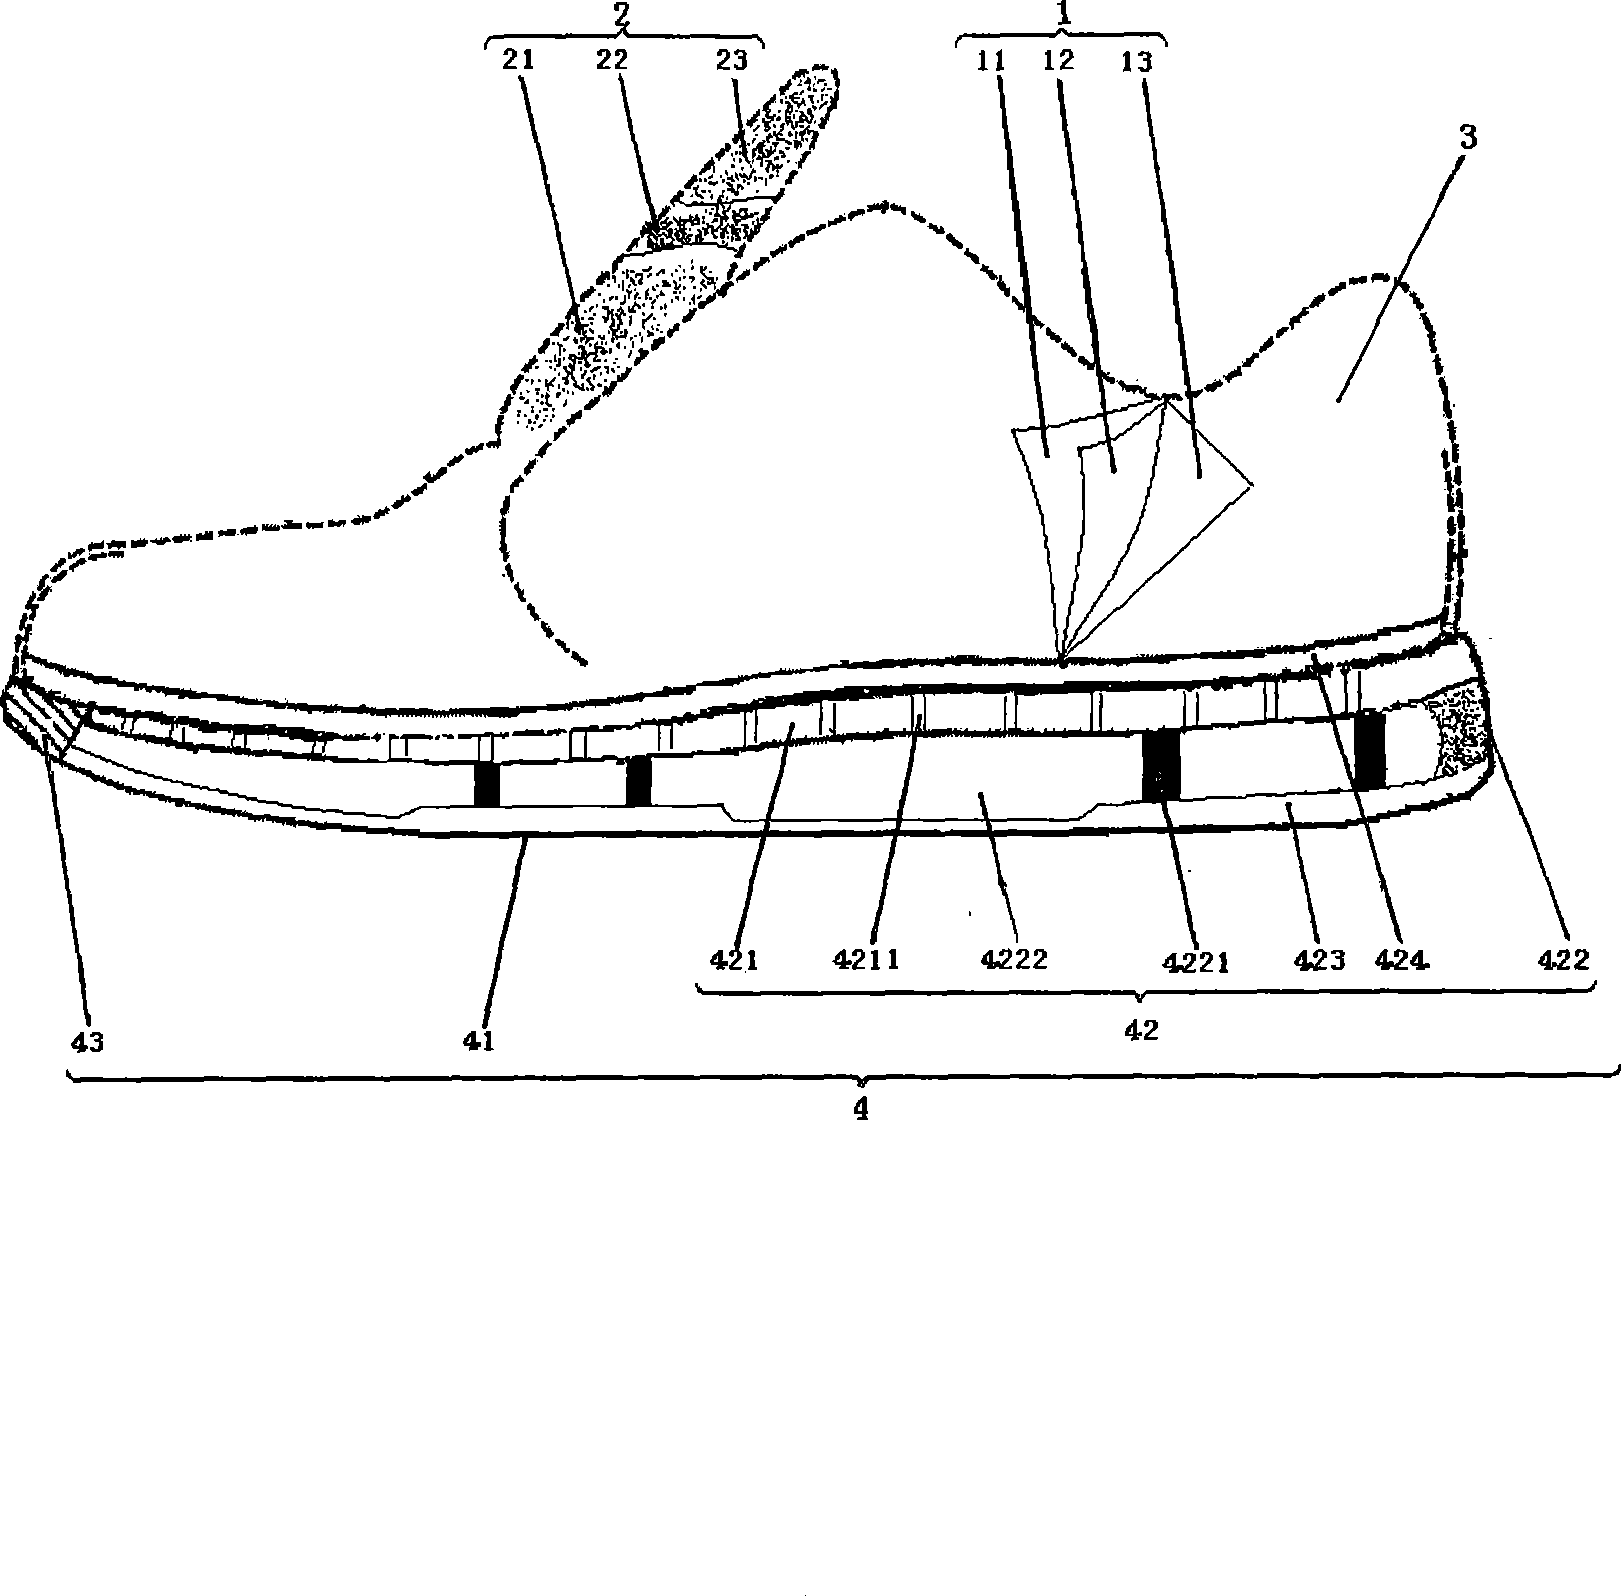 Waterproof, moisture-conductive shoes